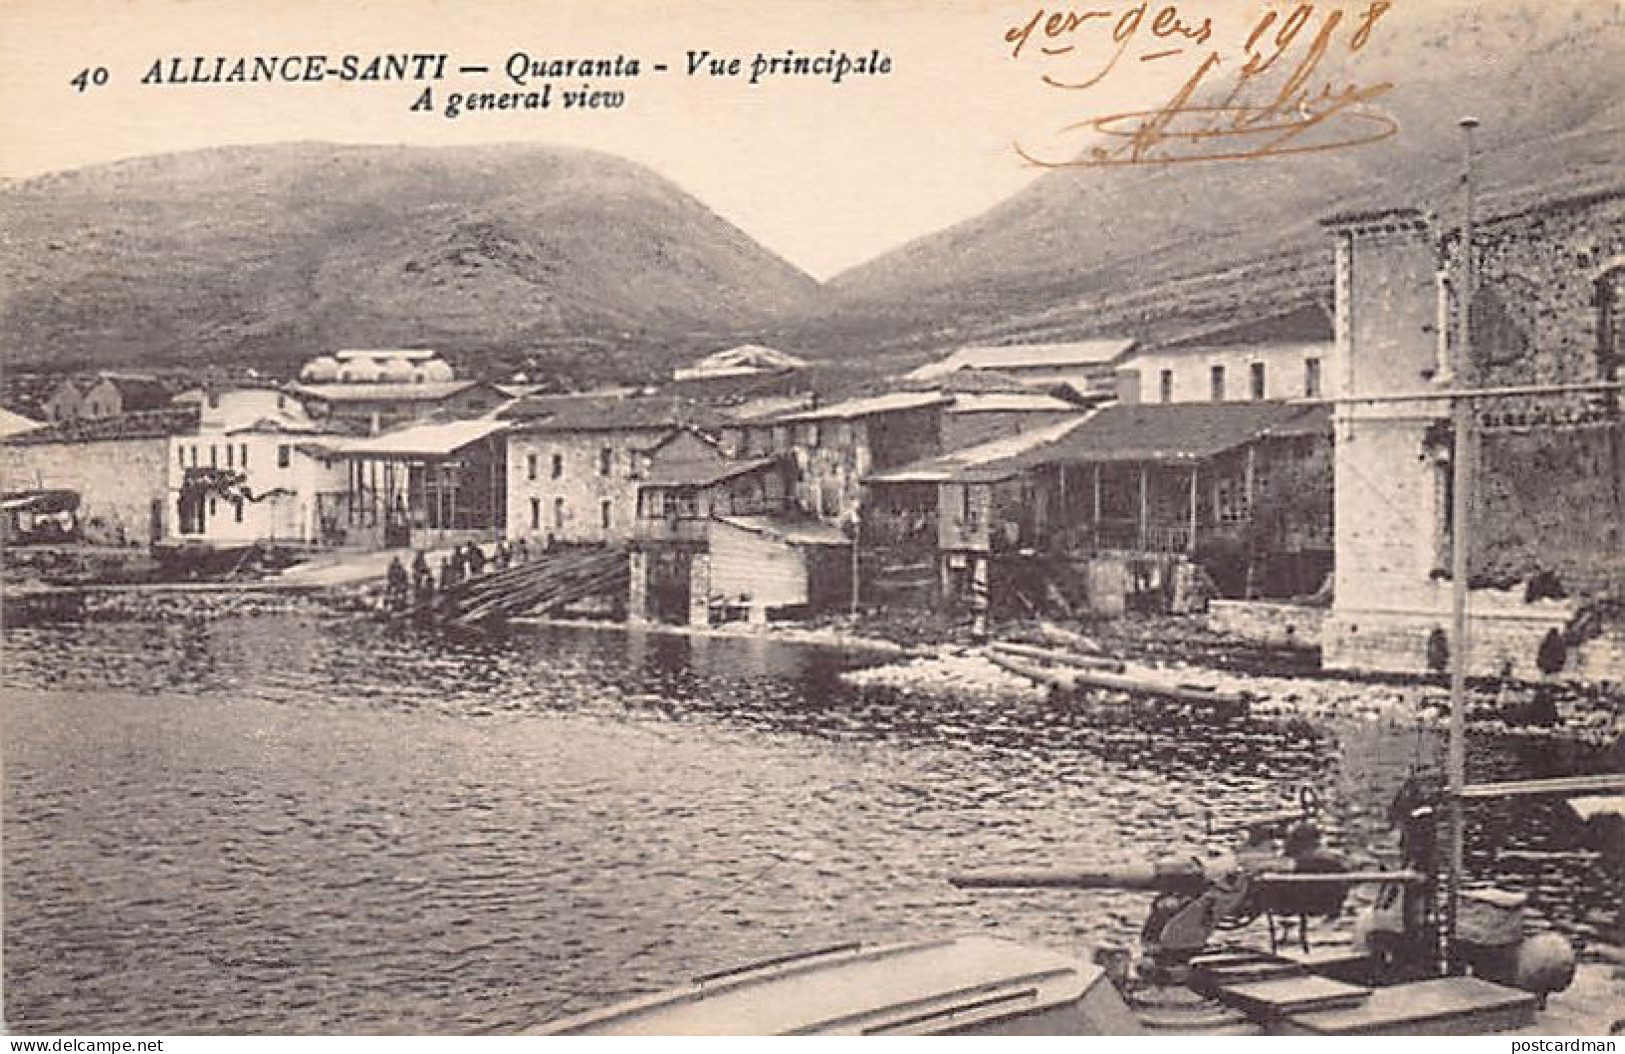 Albania - SARANDË - General View - Publ. Ch. Colas 40 - Albanie